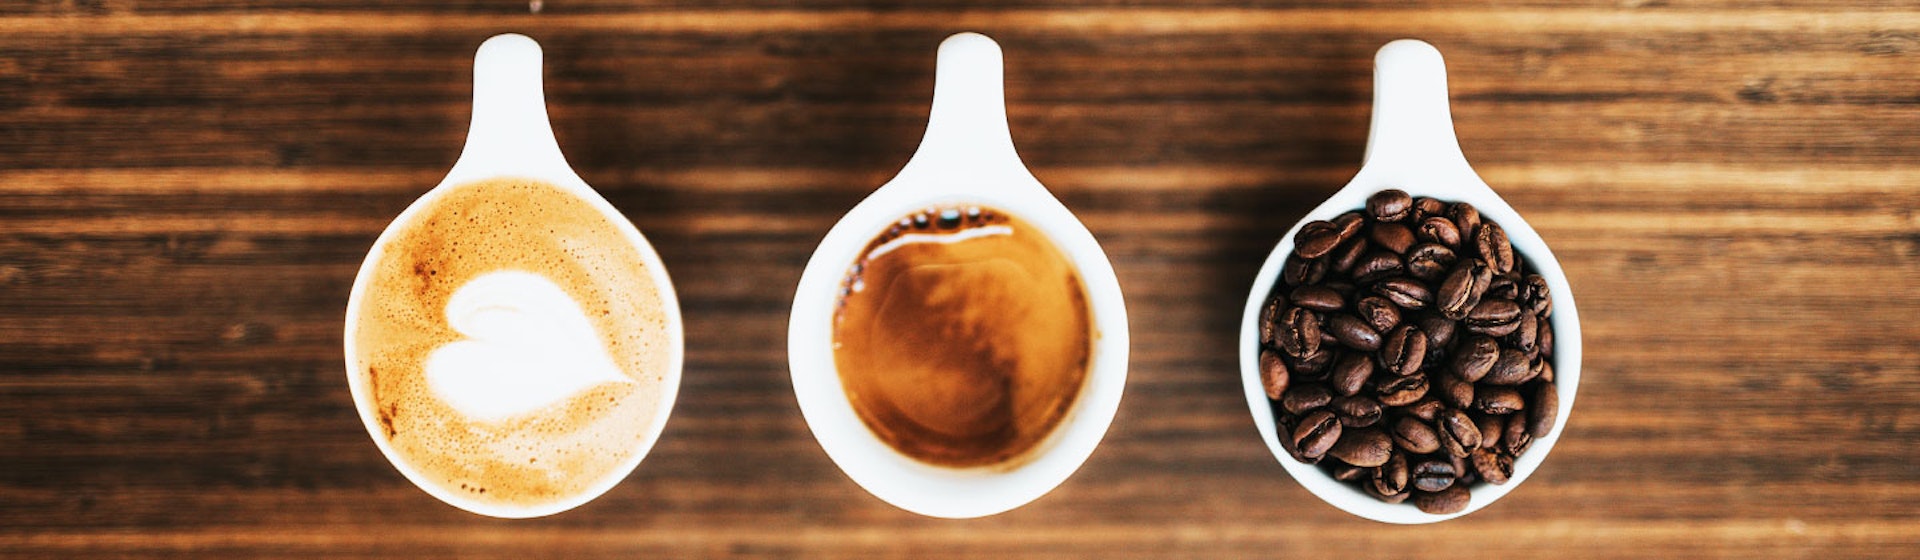 20 tipos de bebidas de café para #CoffeeLovers